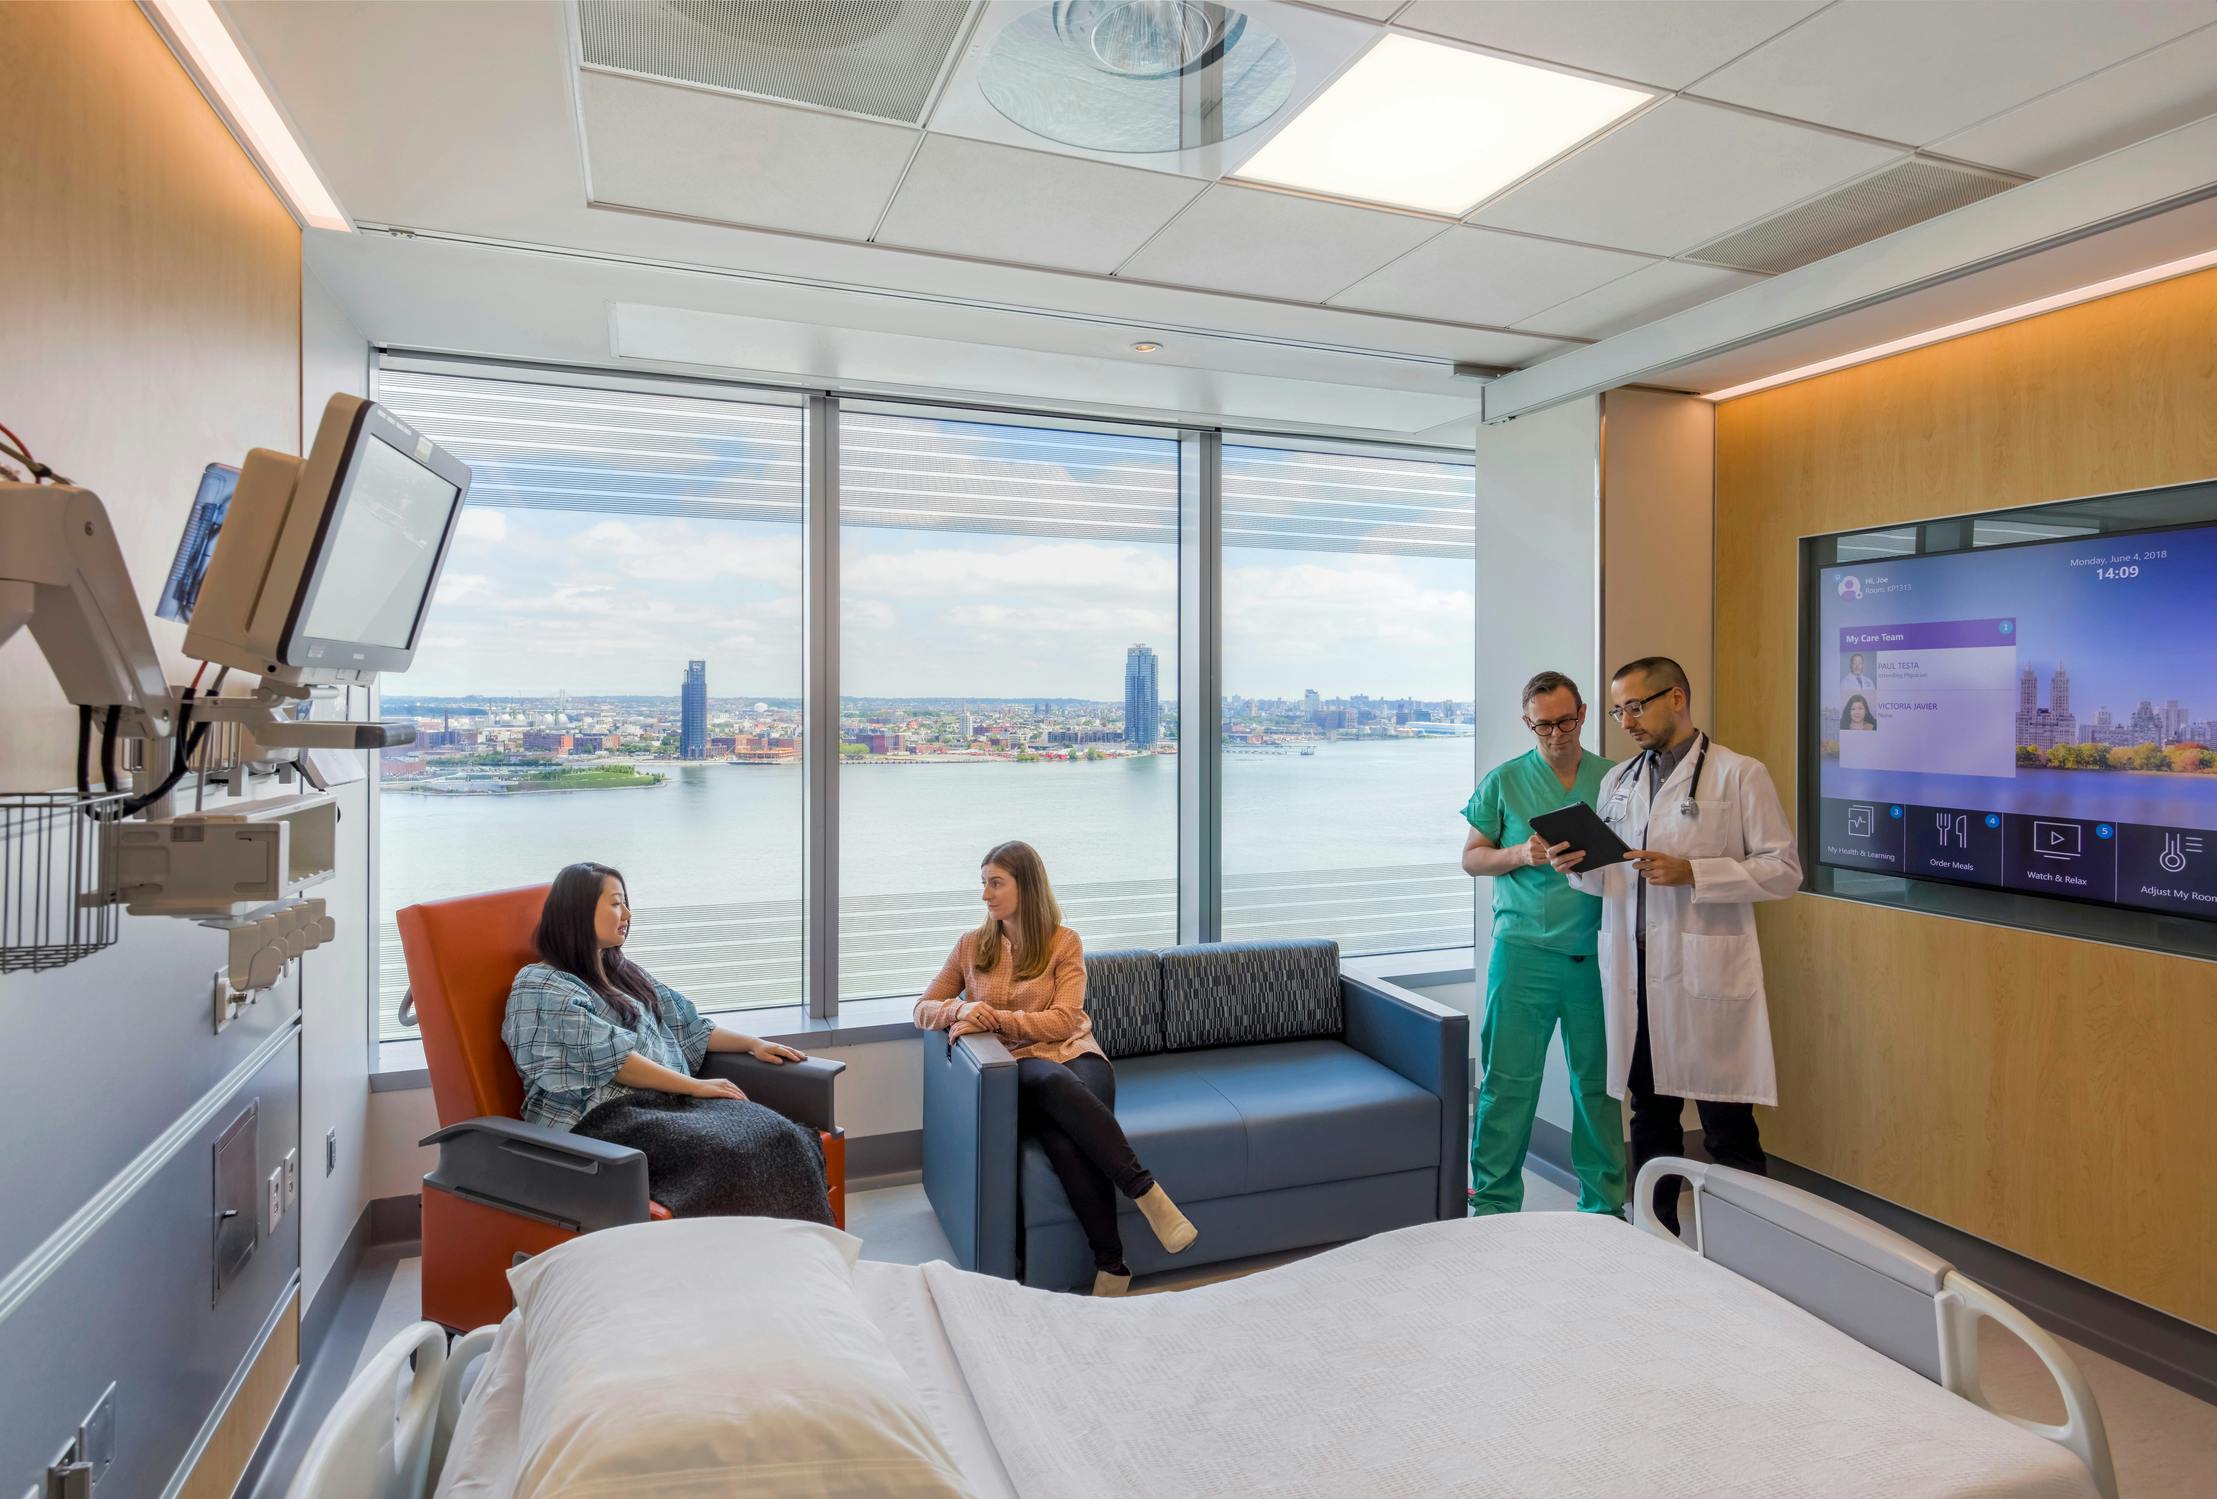 NYU Langone Medical Center, Location: New York, New York, Architect: Ennead